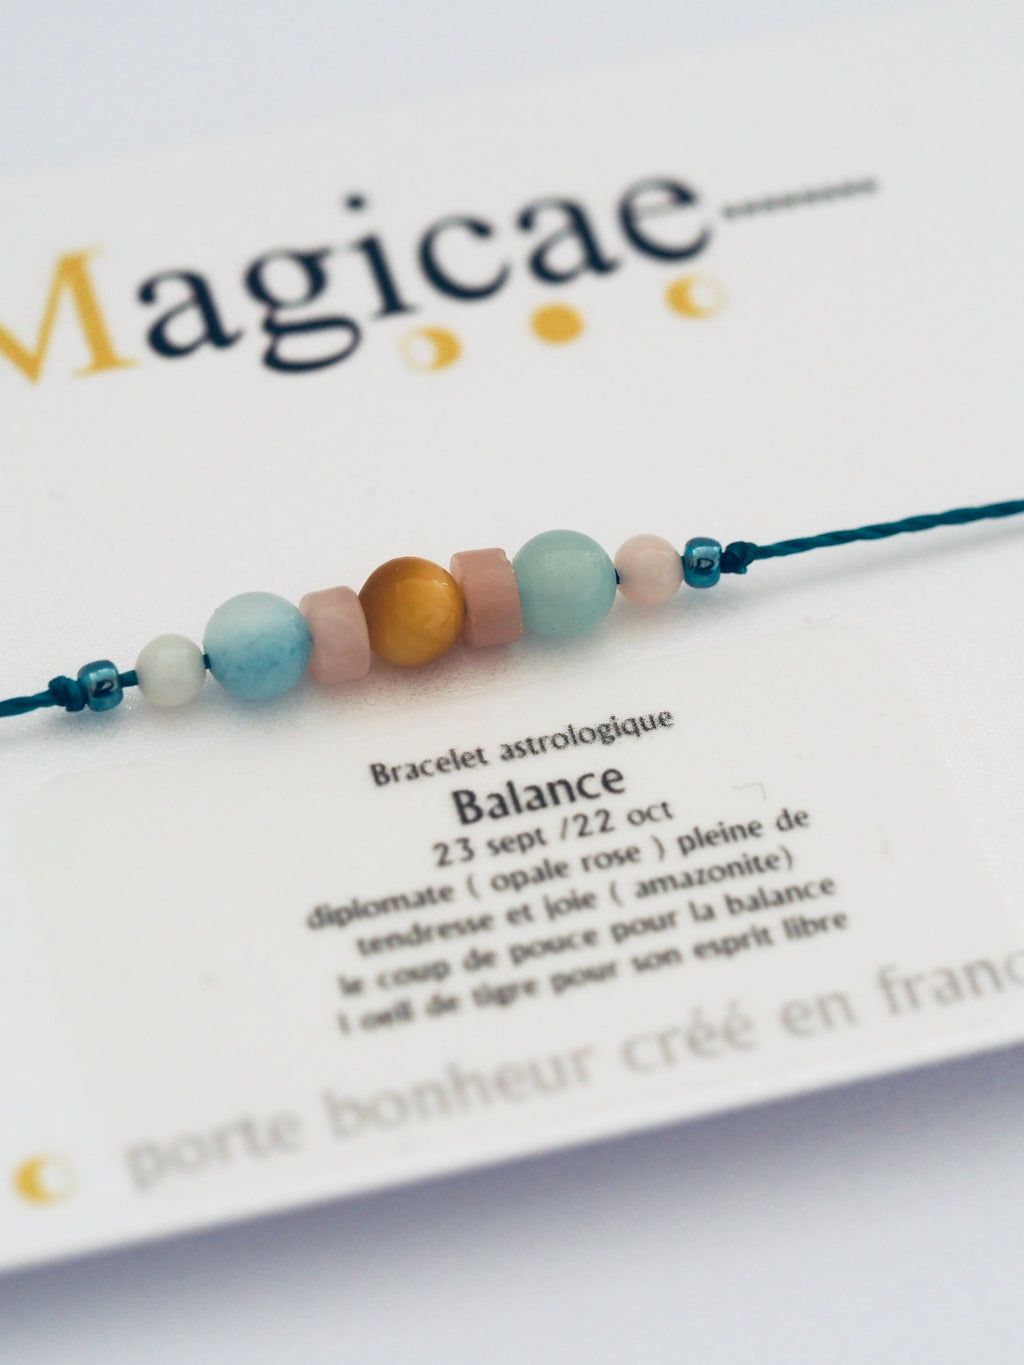 Bracelet astrologique balance - Magicae